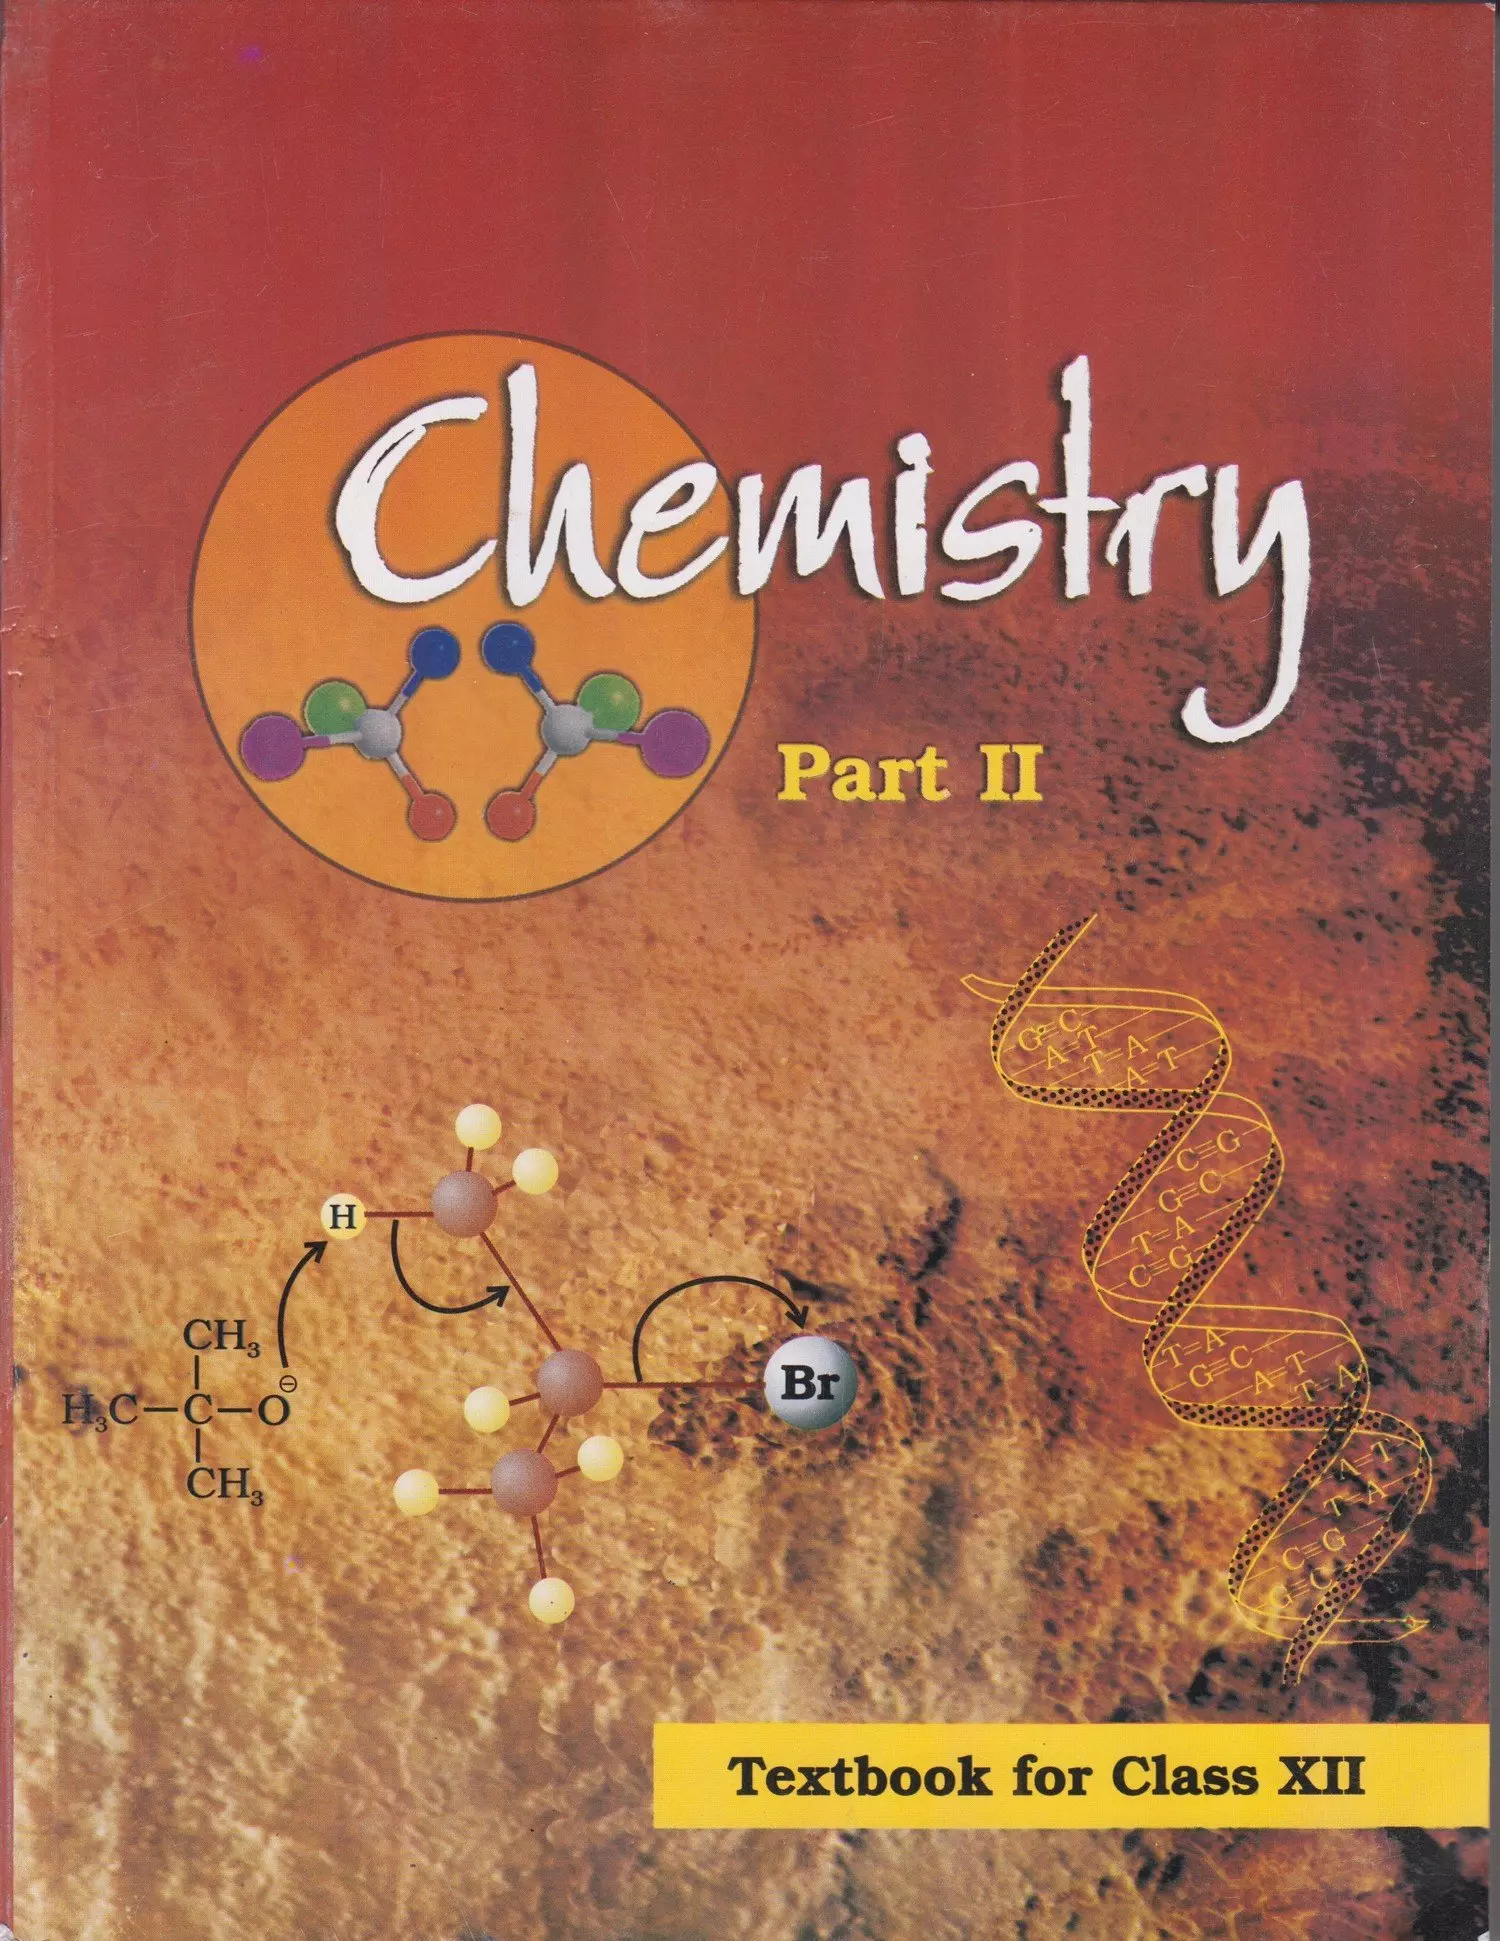 NCERT Class 12 Chemistry Part 2